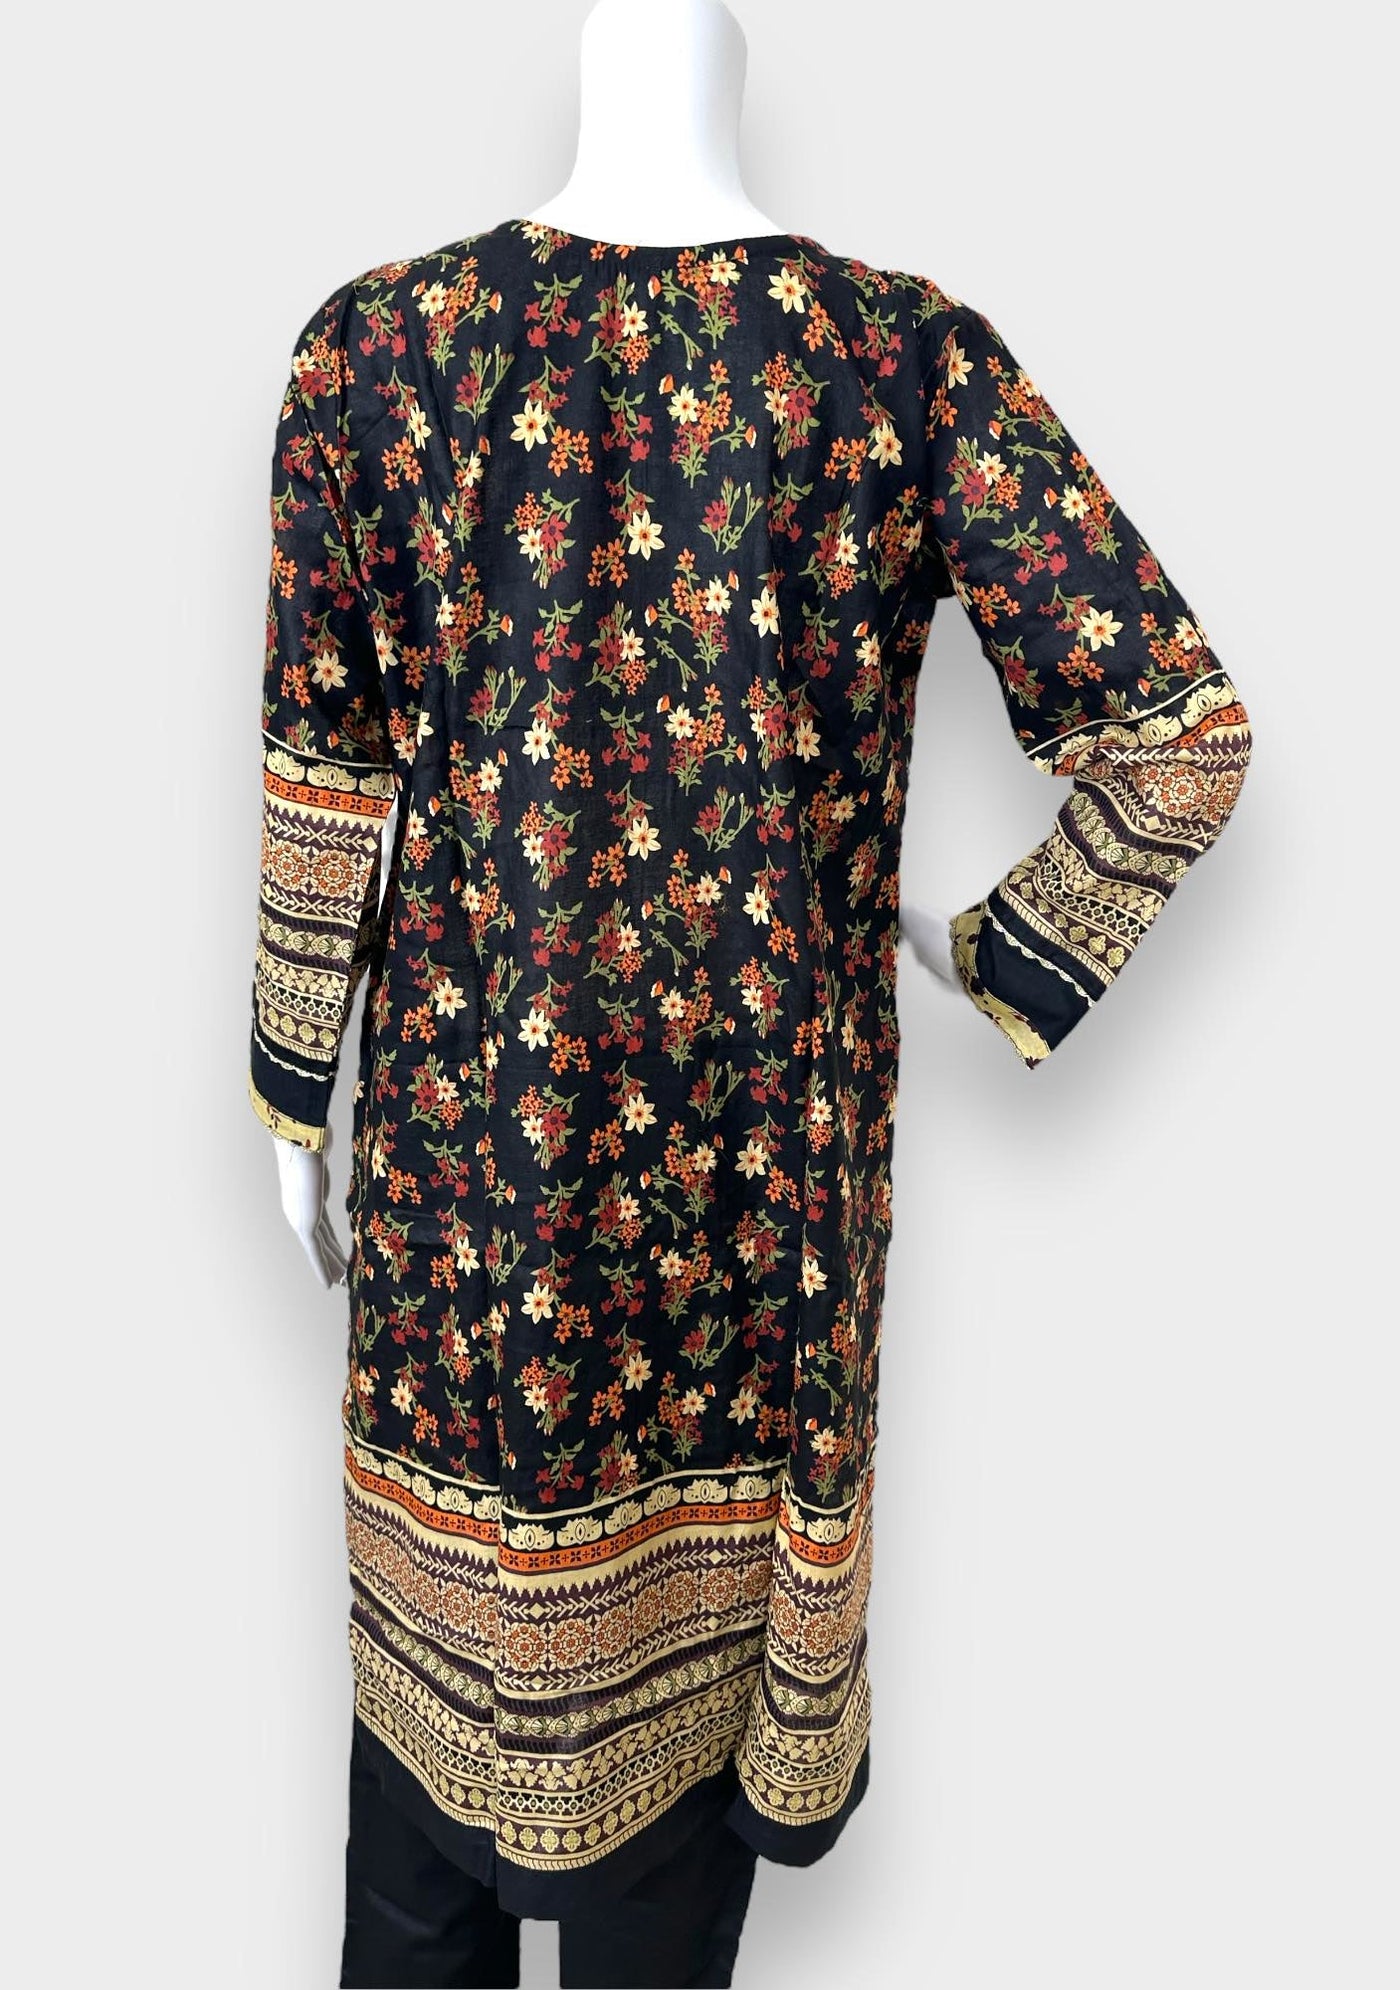 Embroidered 3 Pieces Pakistani Cotton Dress - db25697